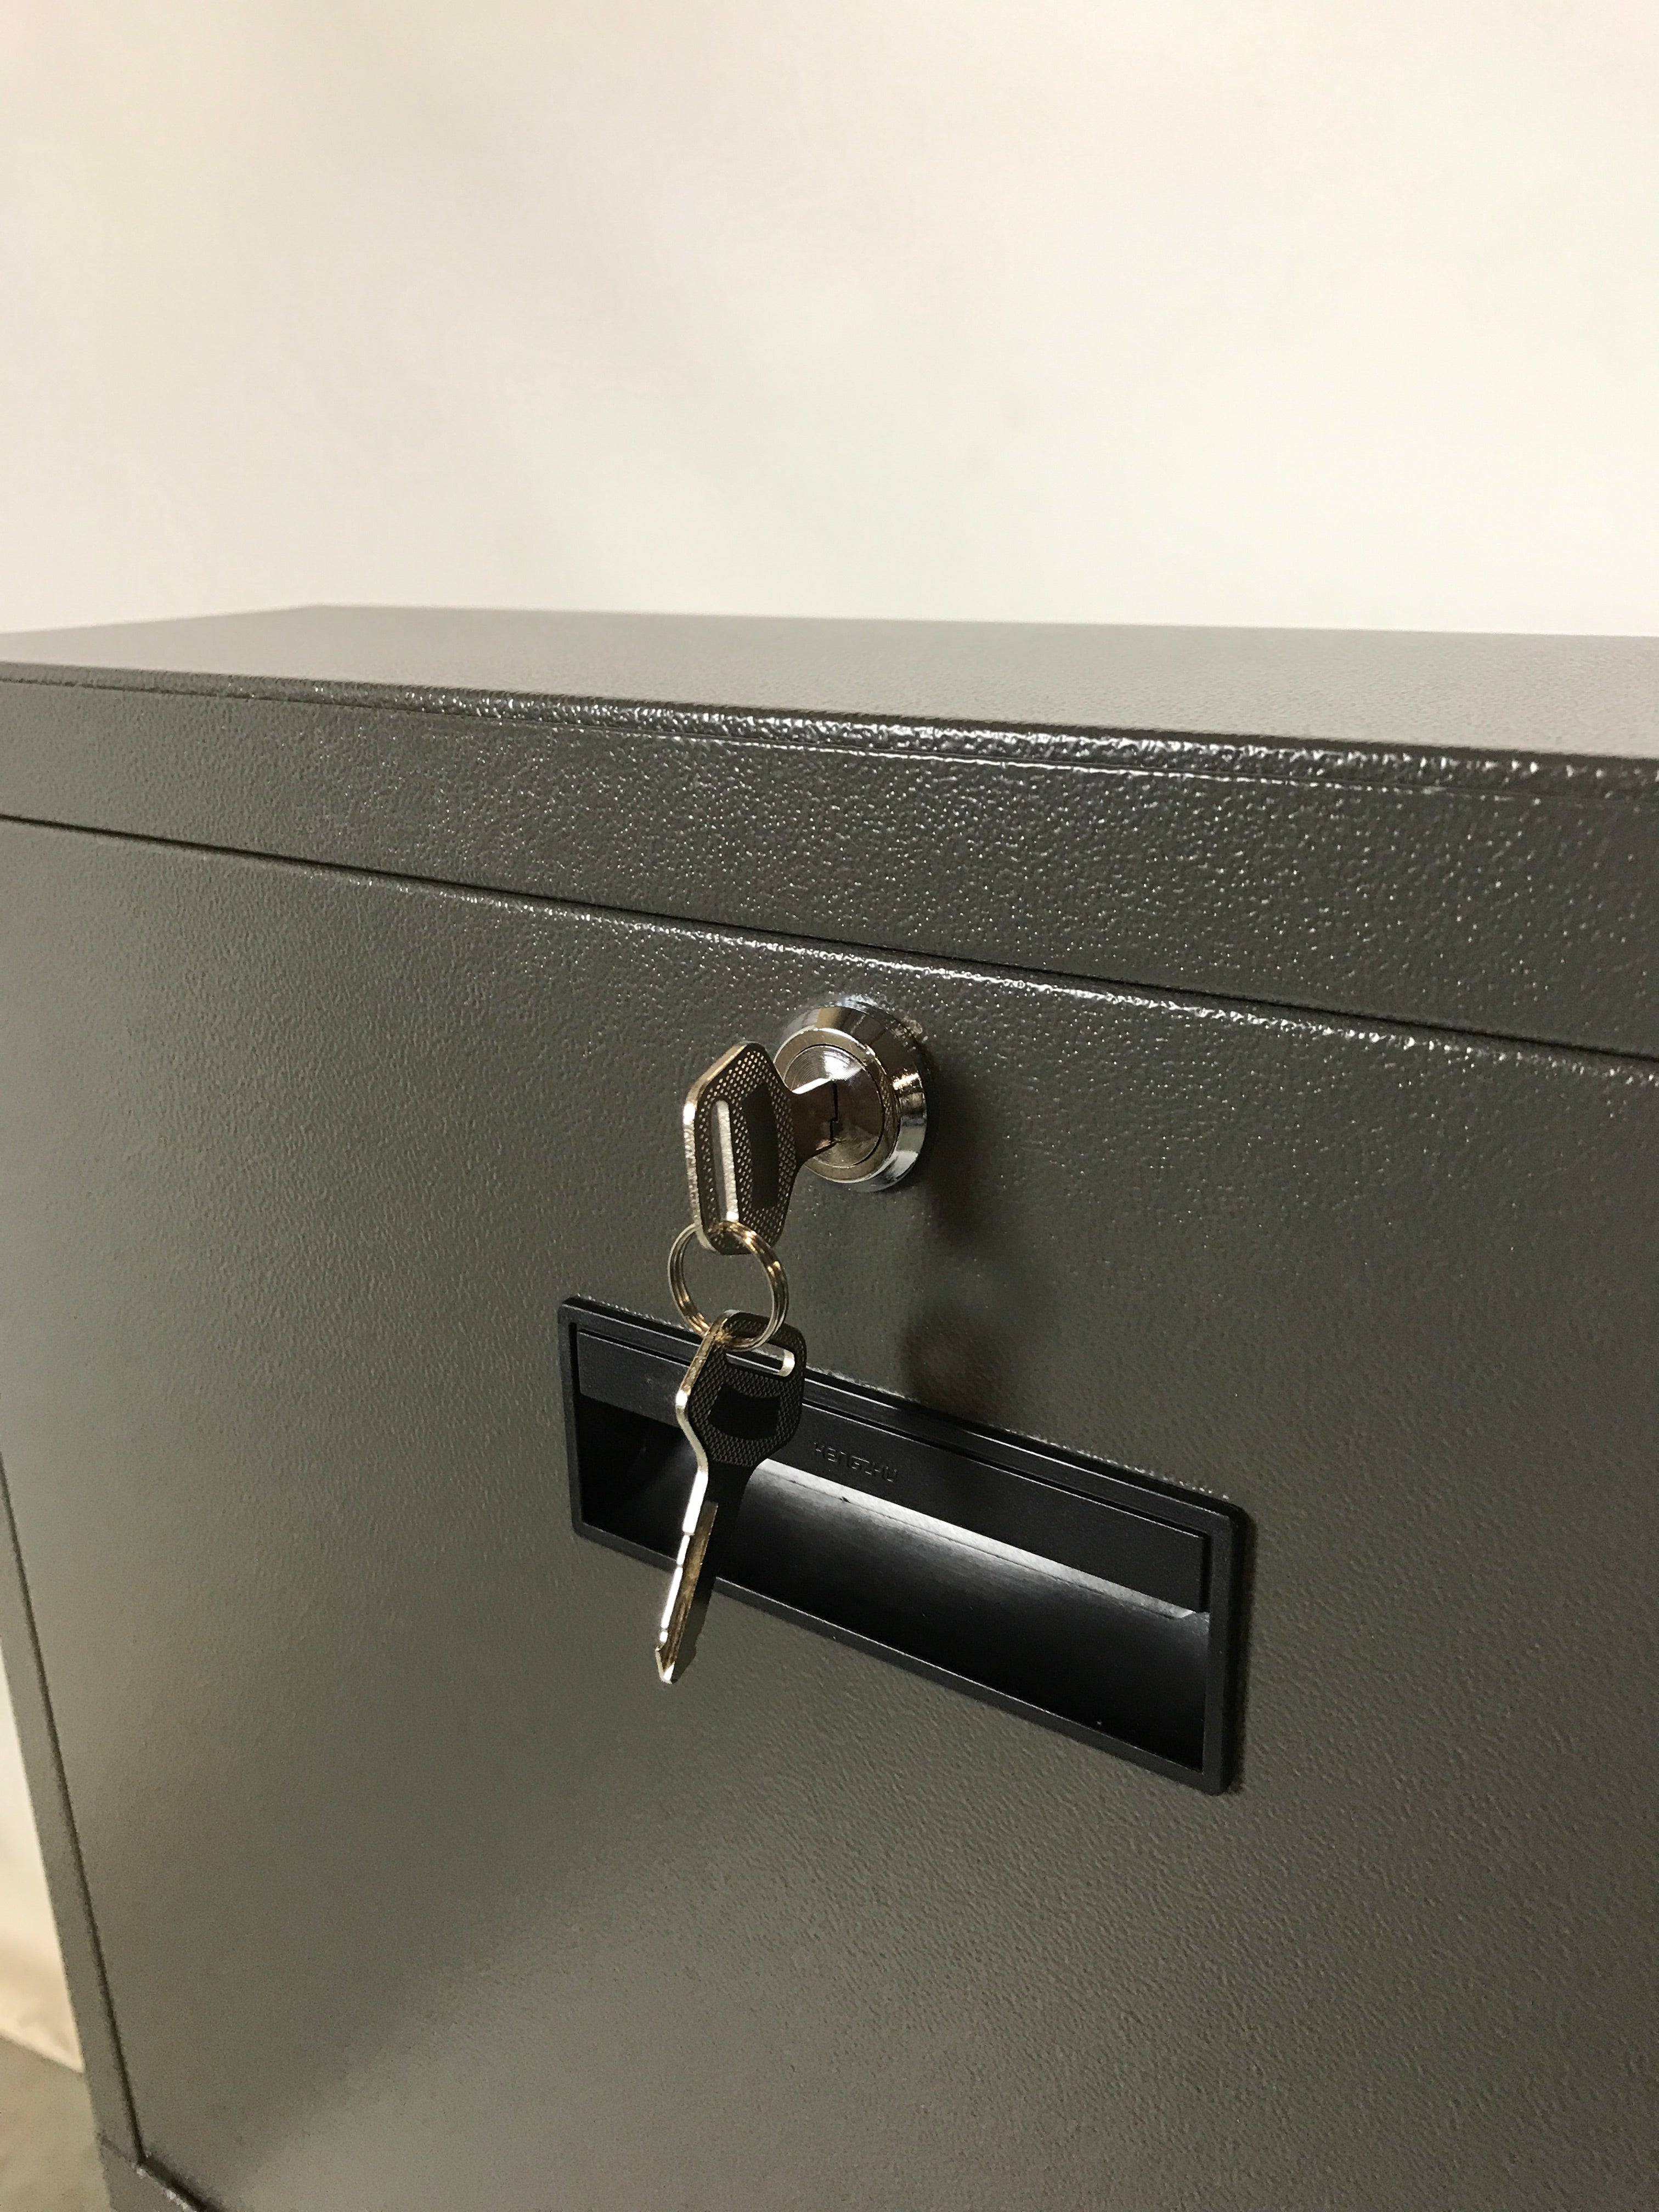 Metal Steel Laptop Security Cabinet